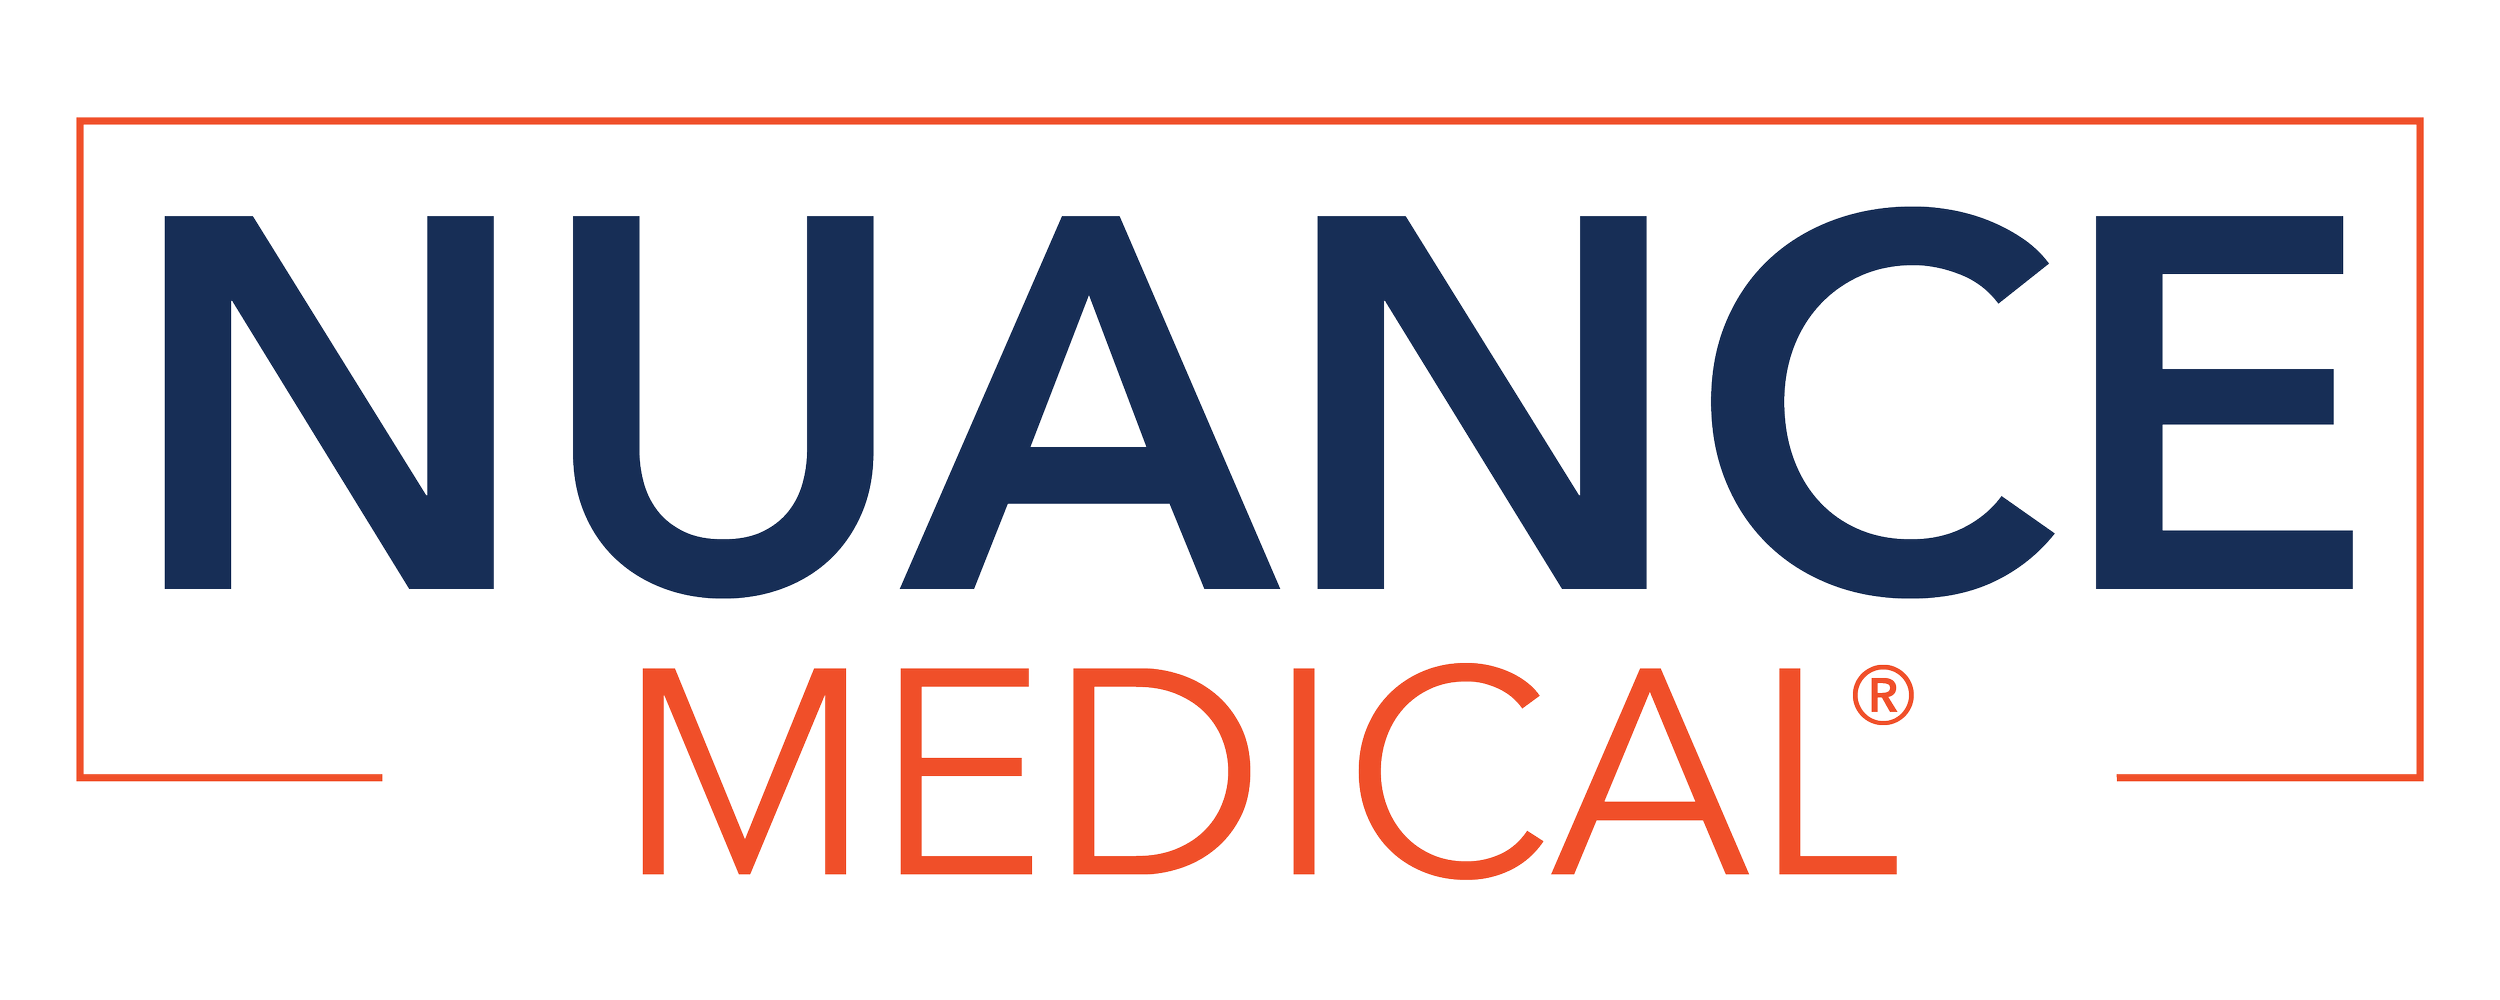 Nuance Medical Logos Color FINAL-01.png